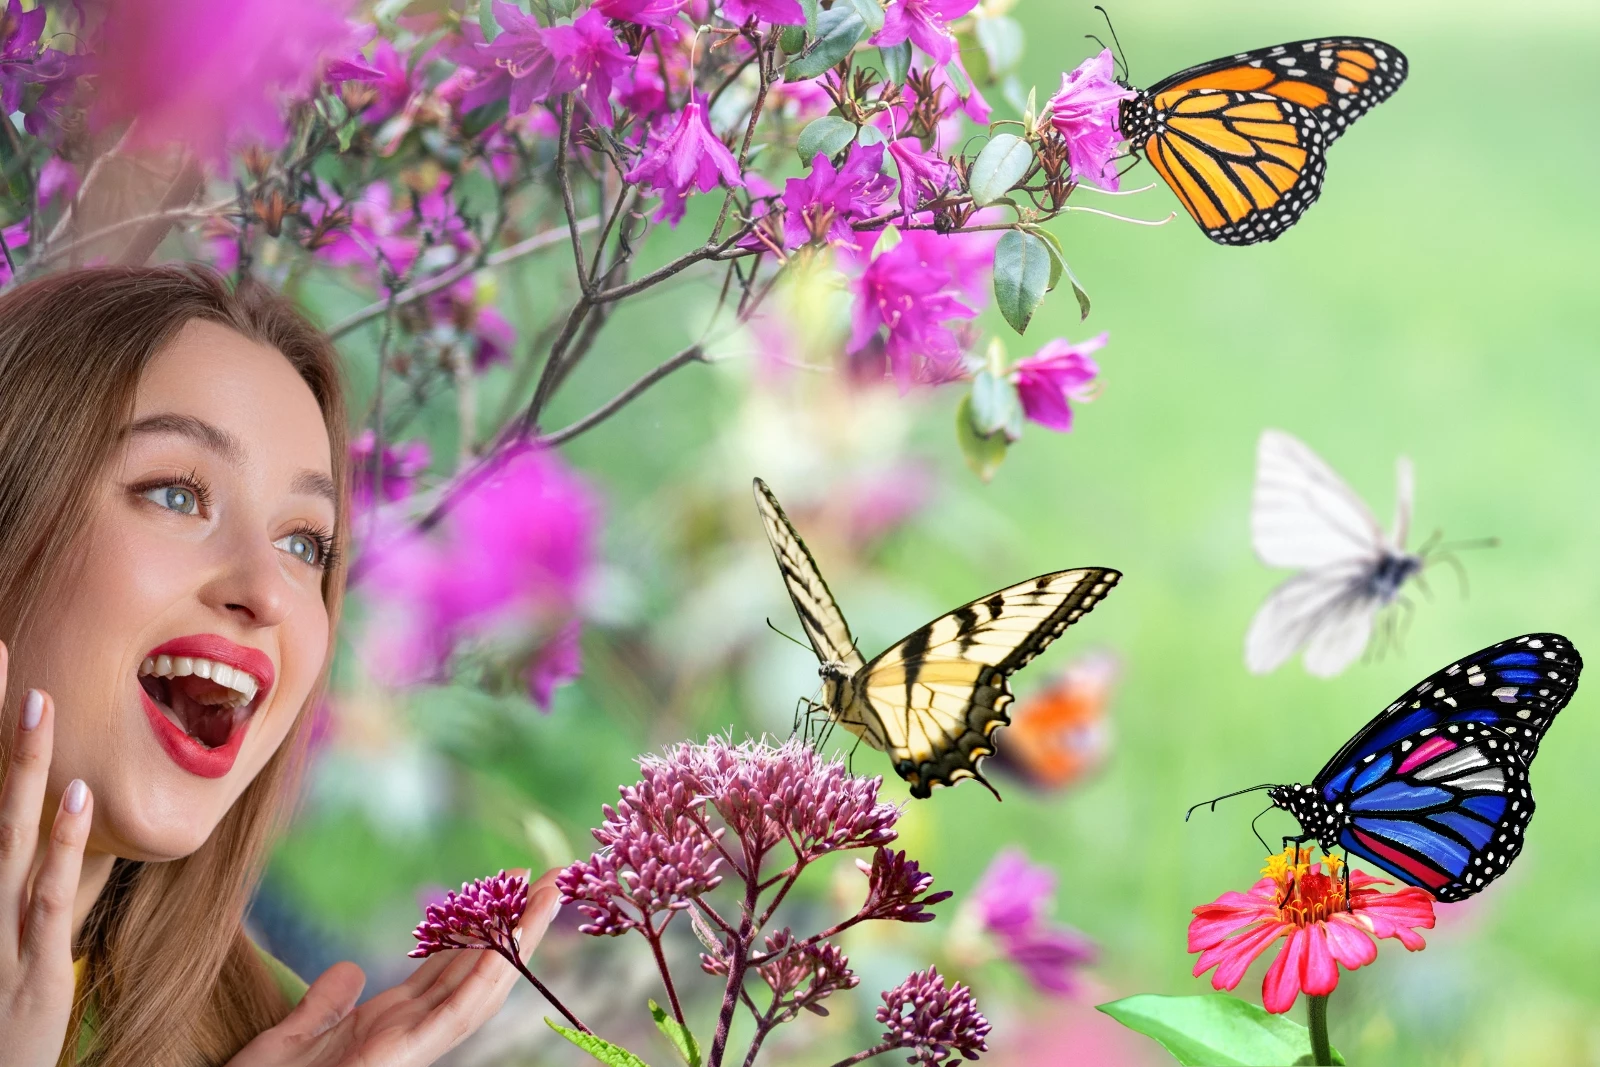 Beautiful 'Butterflies in The Garden' Exhibit at This Texas Attraction